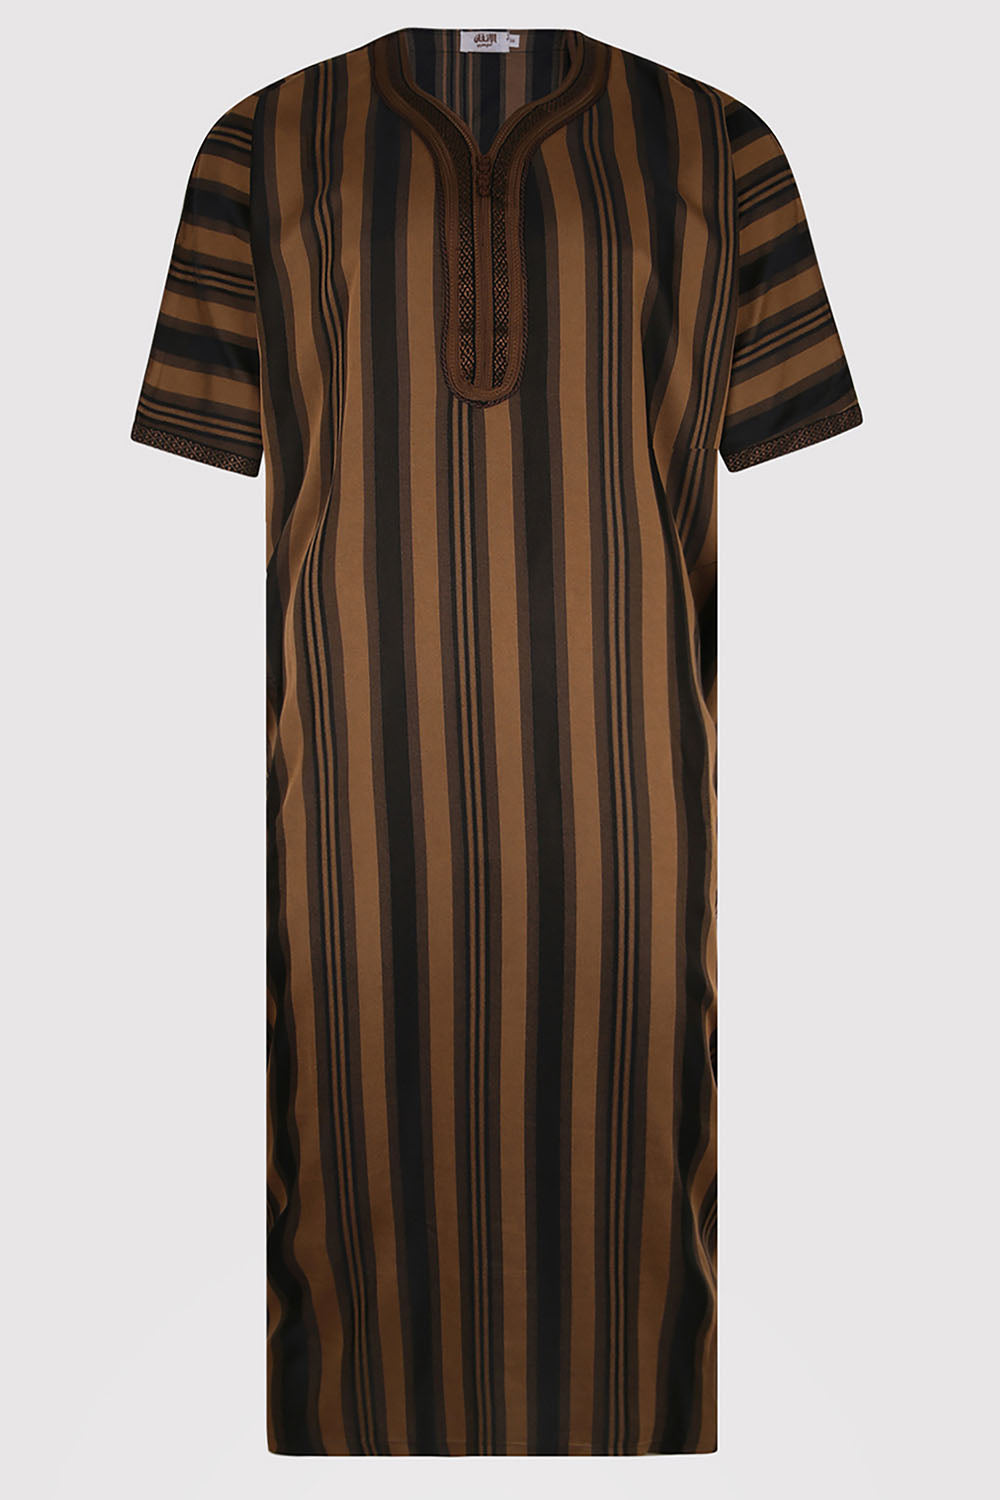 Striped Short Sleeve Mens Gandoura Thobe In Brown & Black